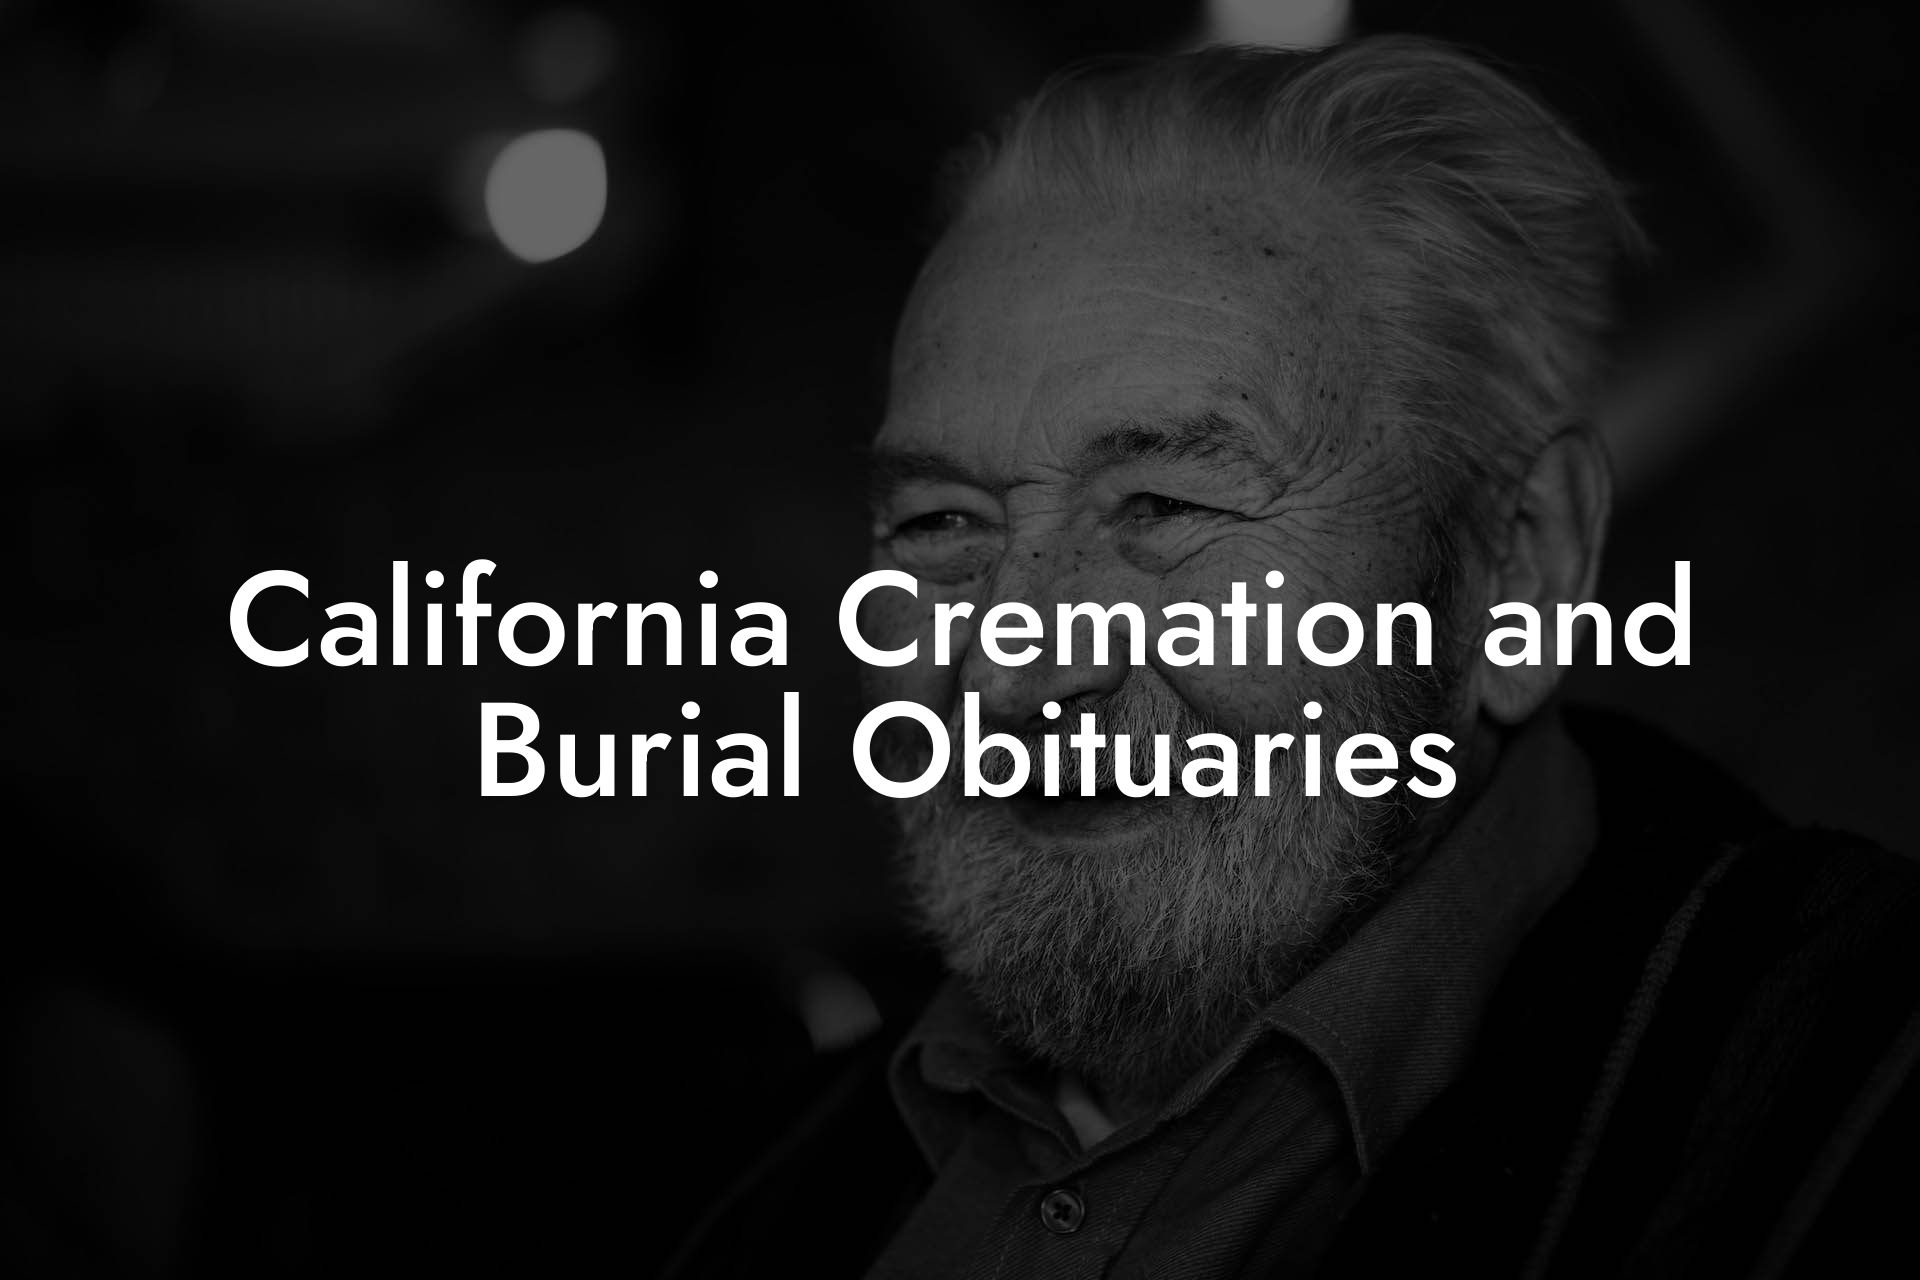 California Cremation and Burial Obituaries